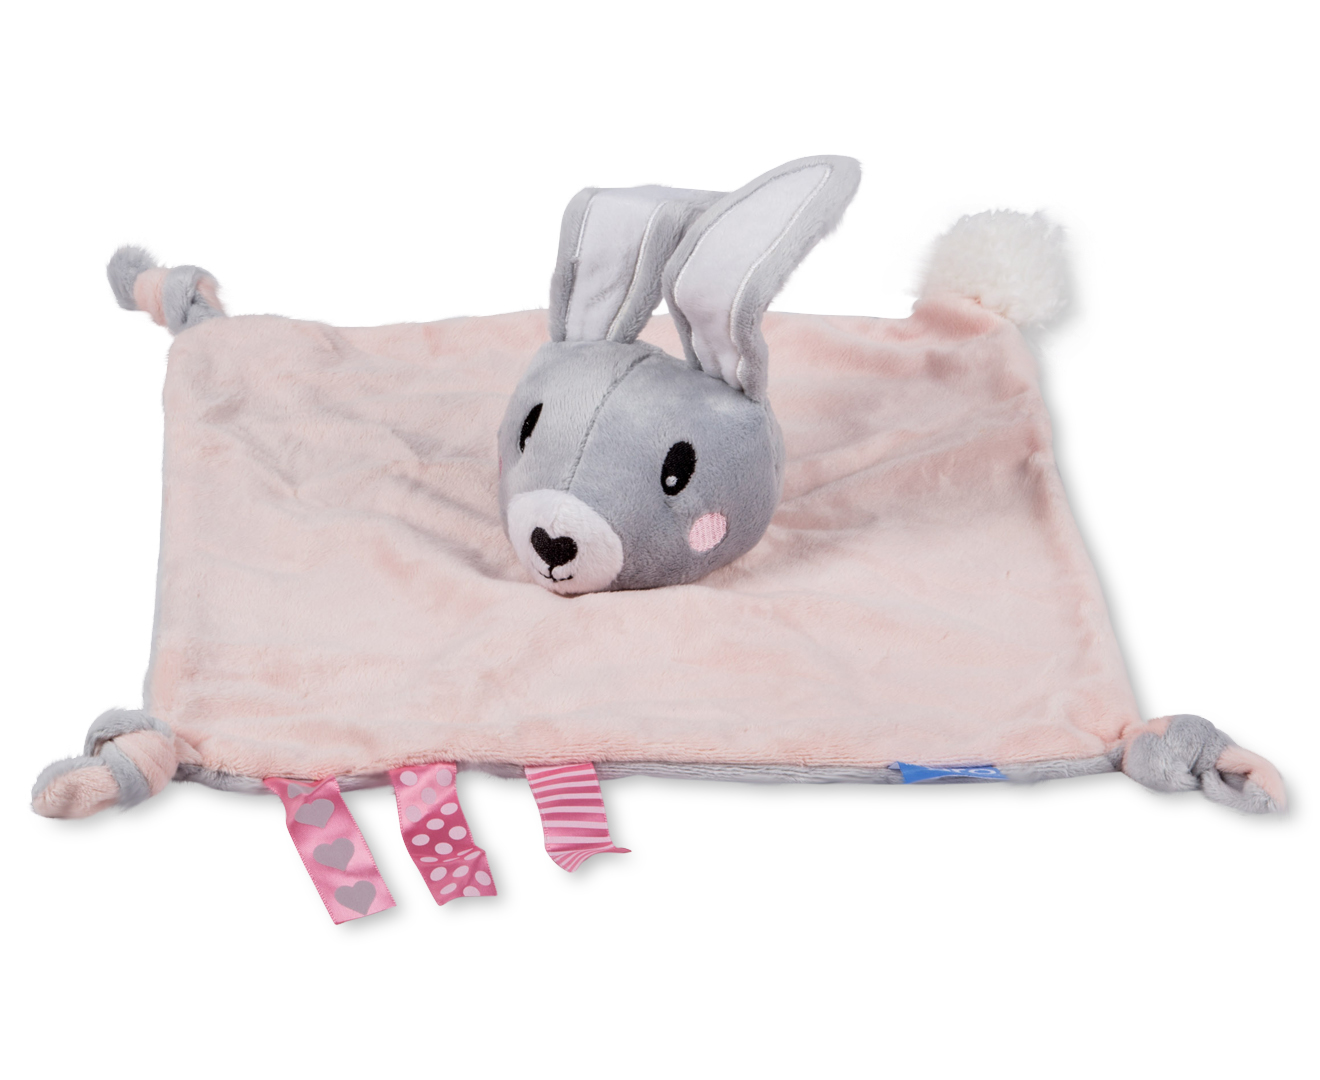 gro company bunny comforter